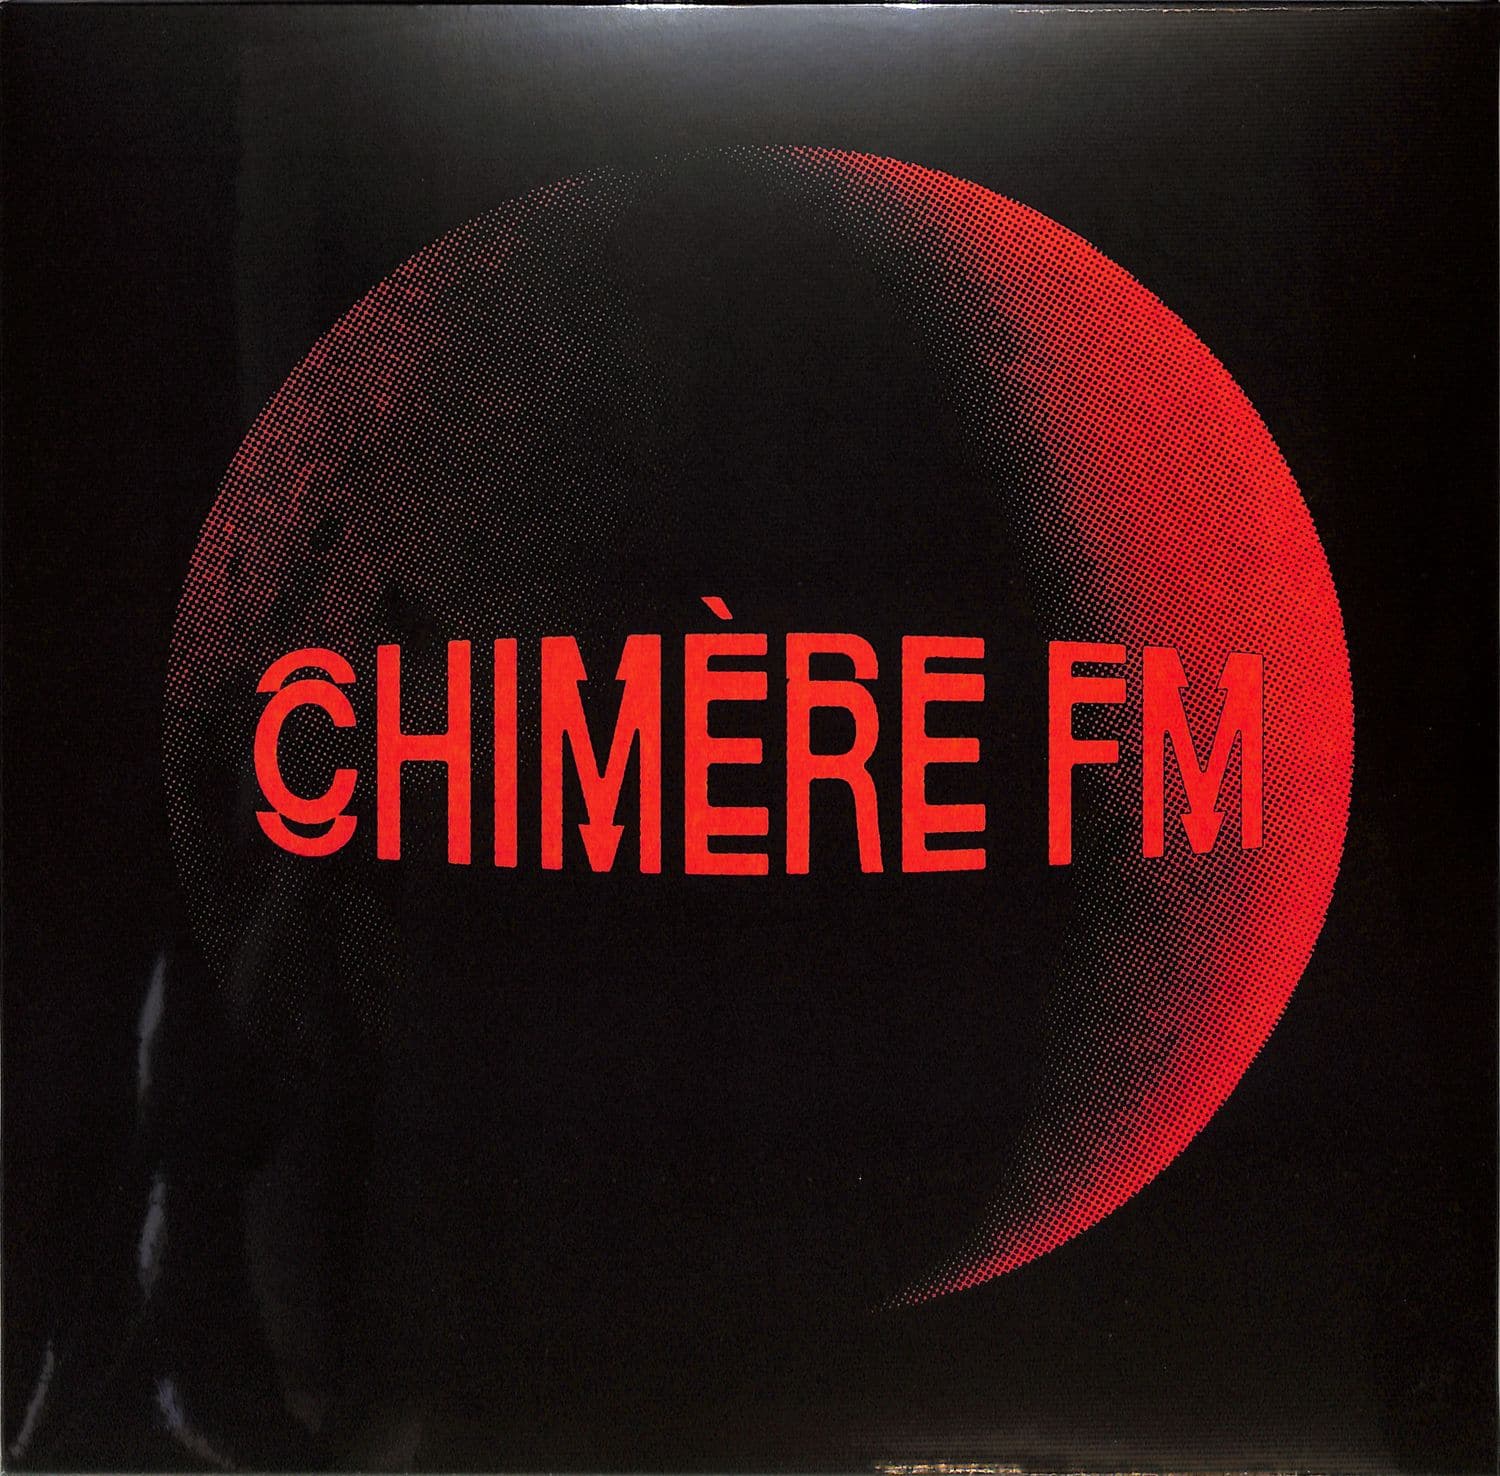 Chimere FM - CHIMERE FM 